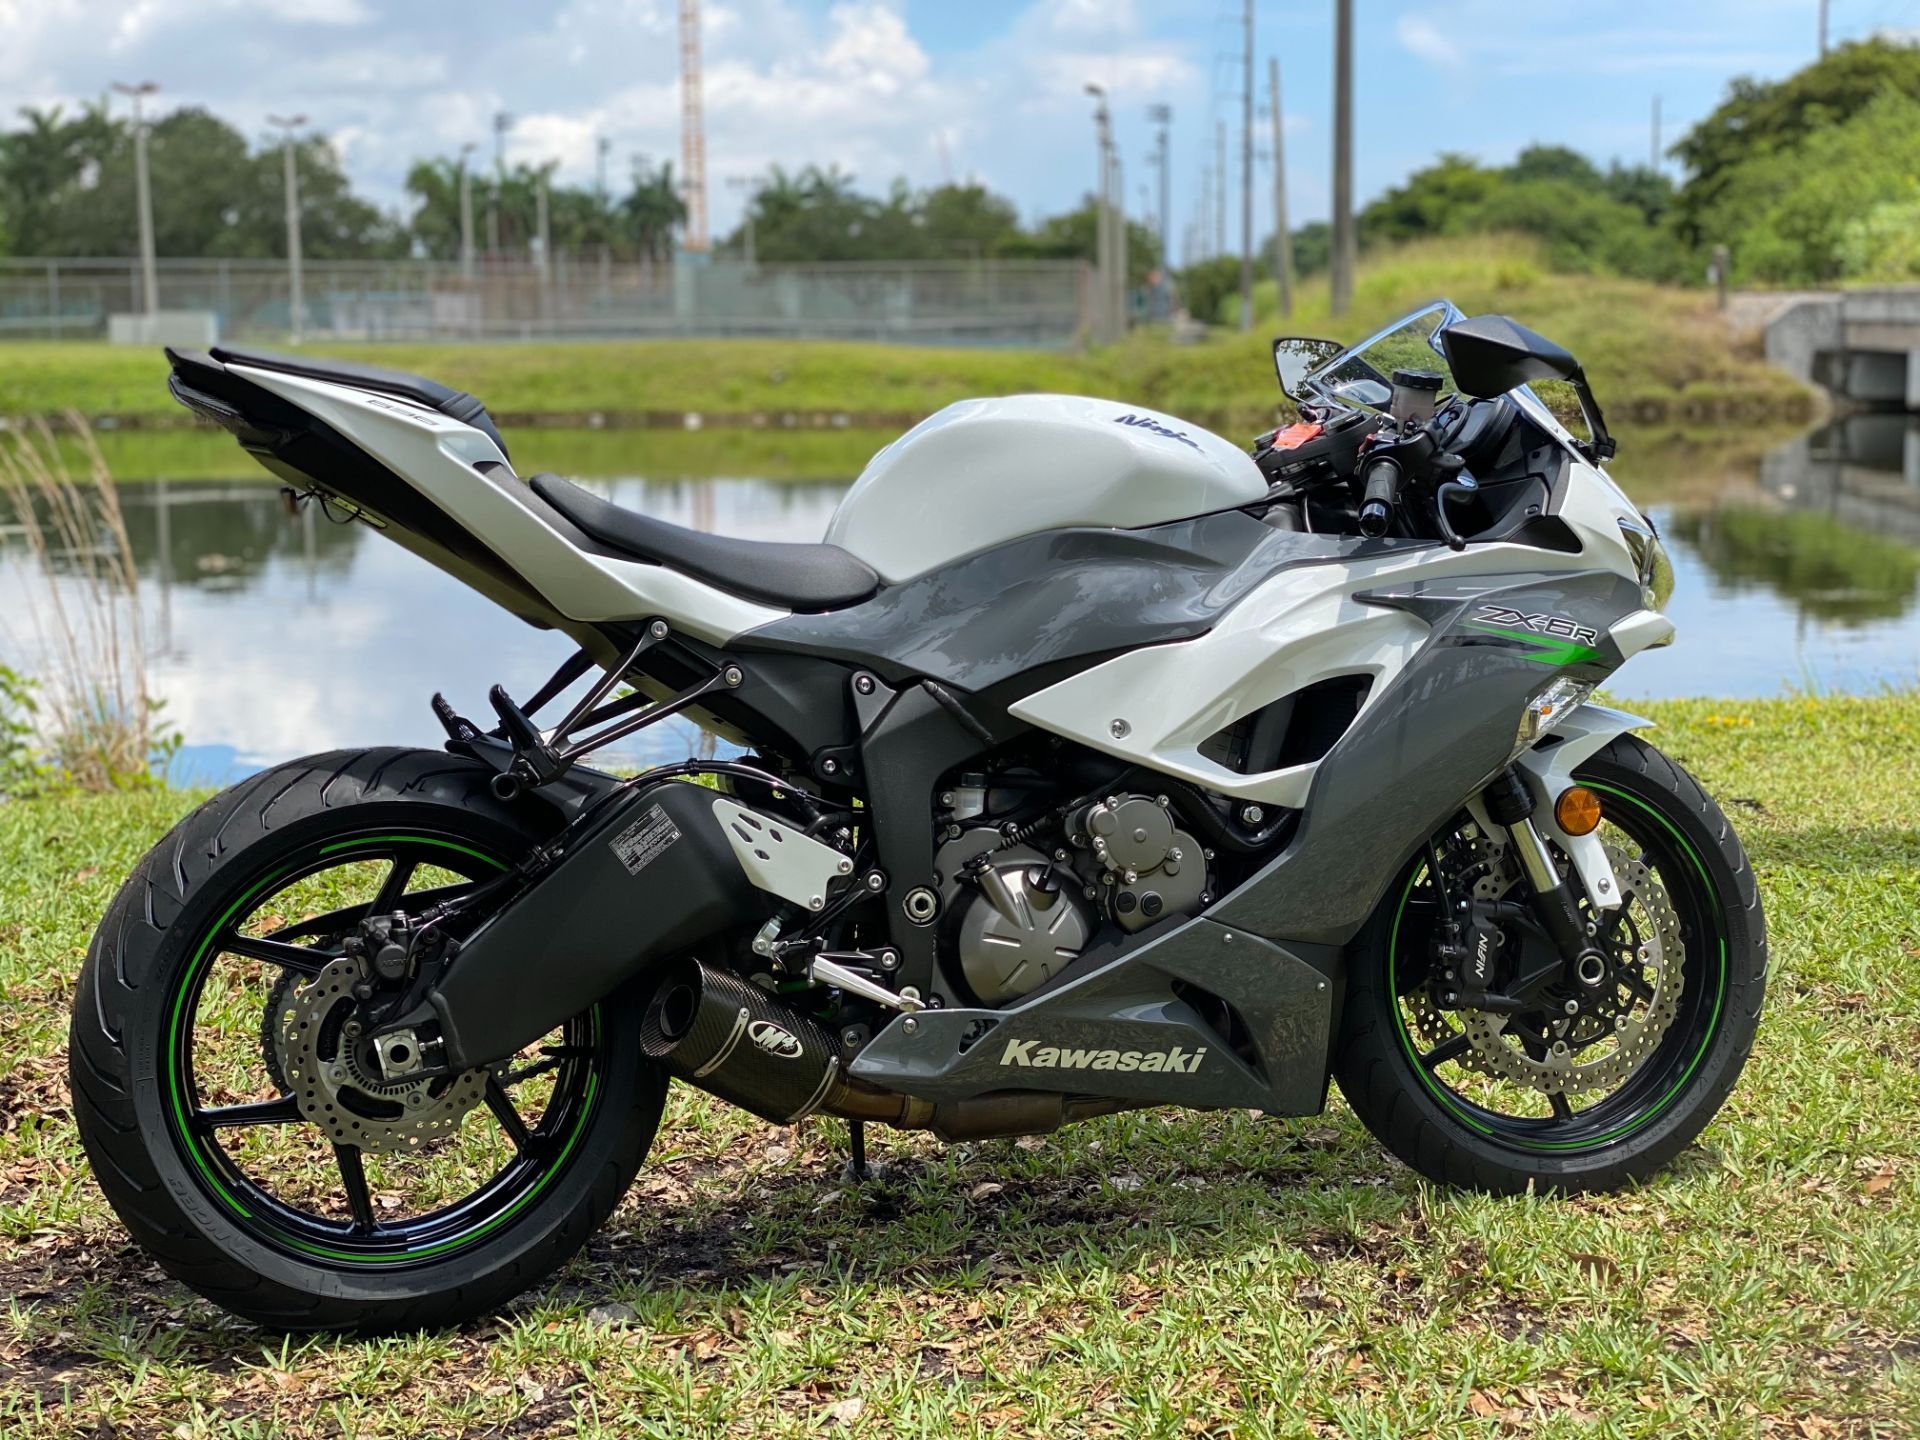 2021 Kawasaki Ninja ZX-6R in North Miami Beach, Florida - Photo 4